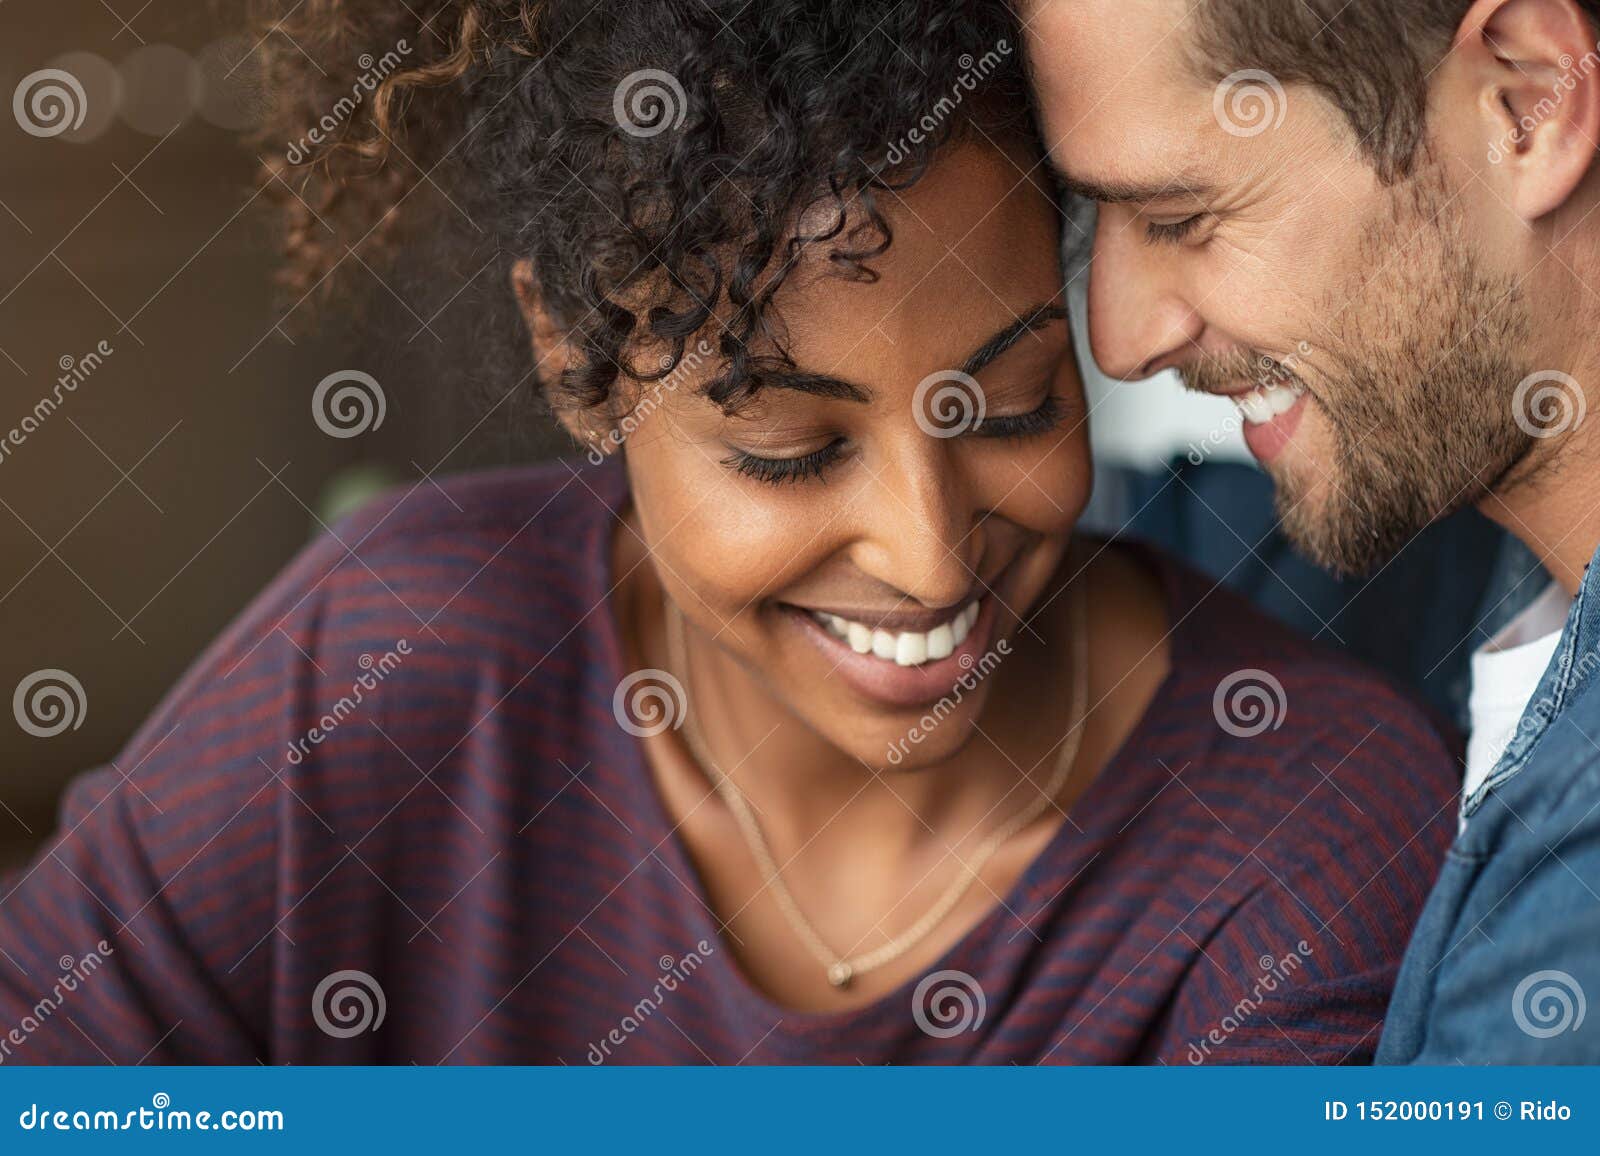 romantic multiethnic couple in love